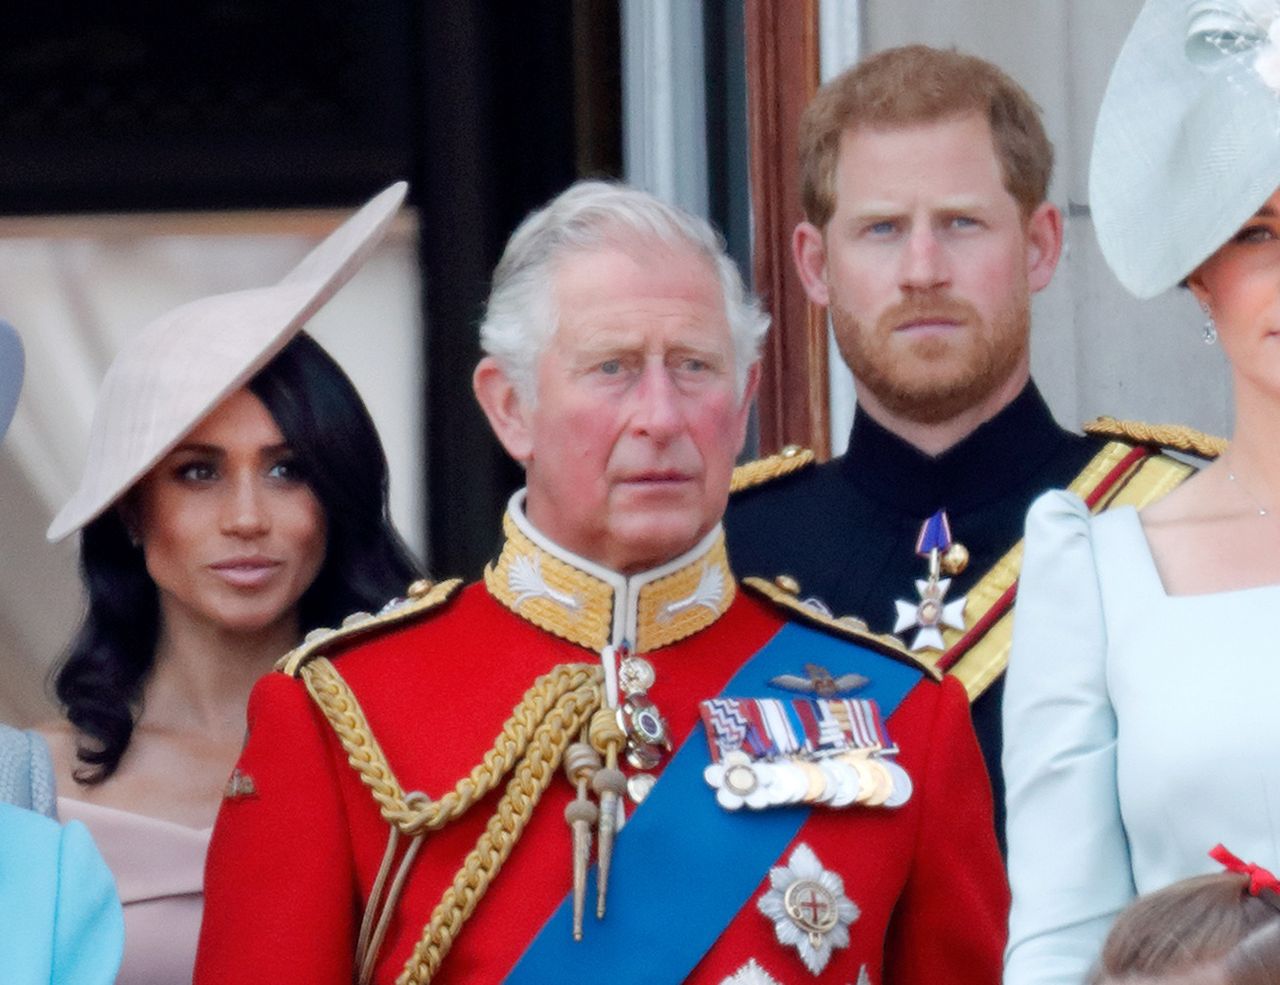 Prince Harry, Meghan Markle and King Charles III